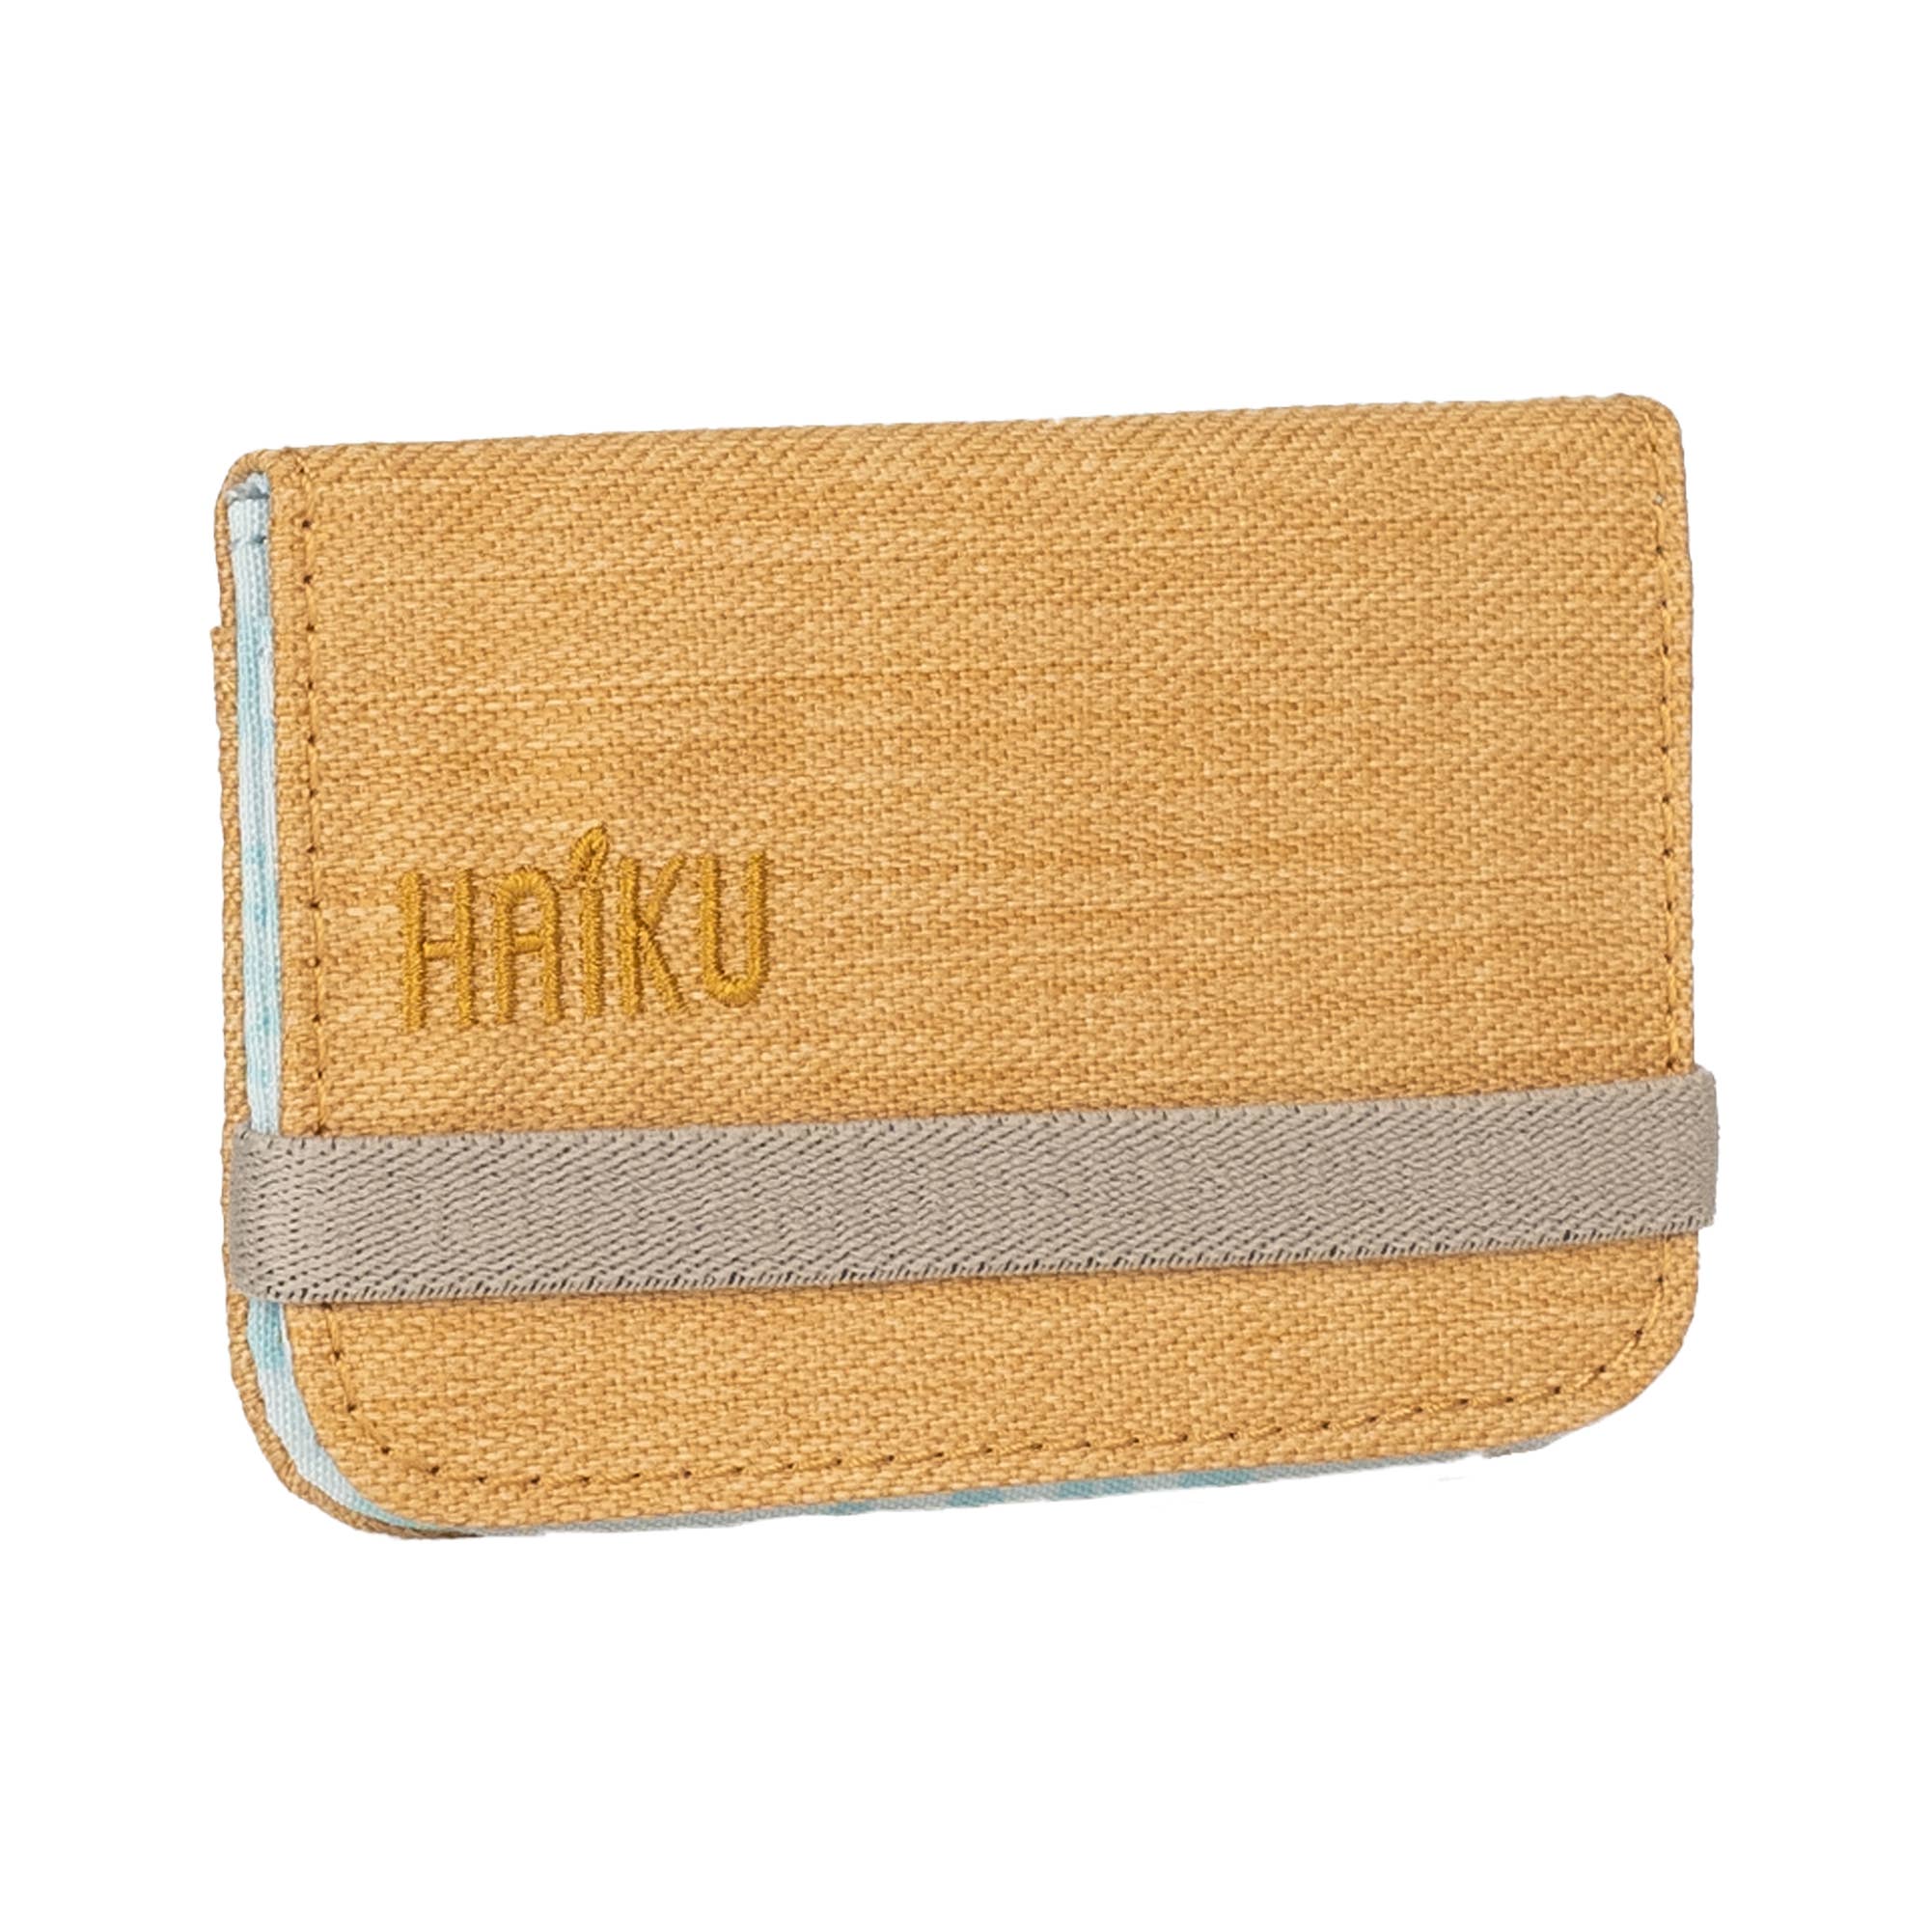 RFID Mini Wallet 2.0: Honeycomb